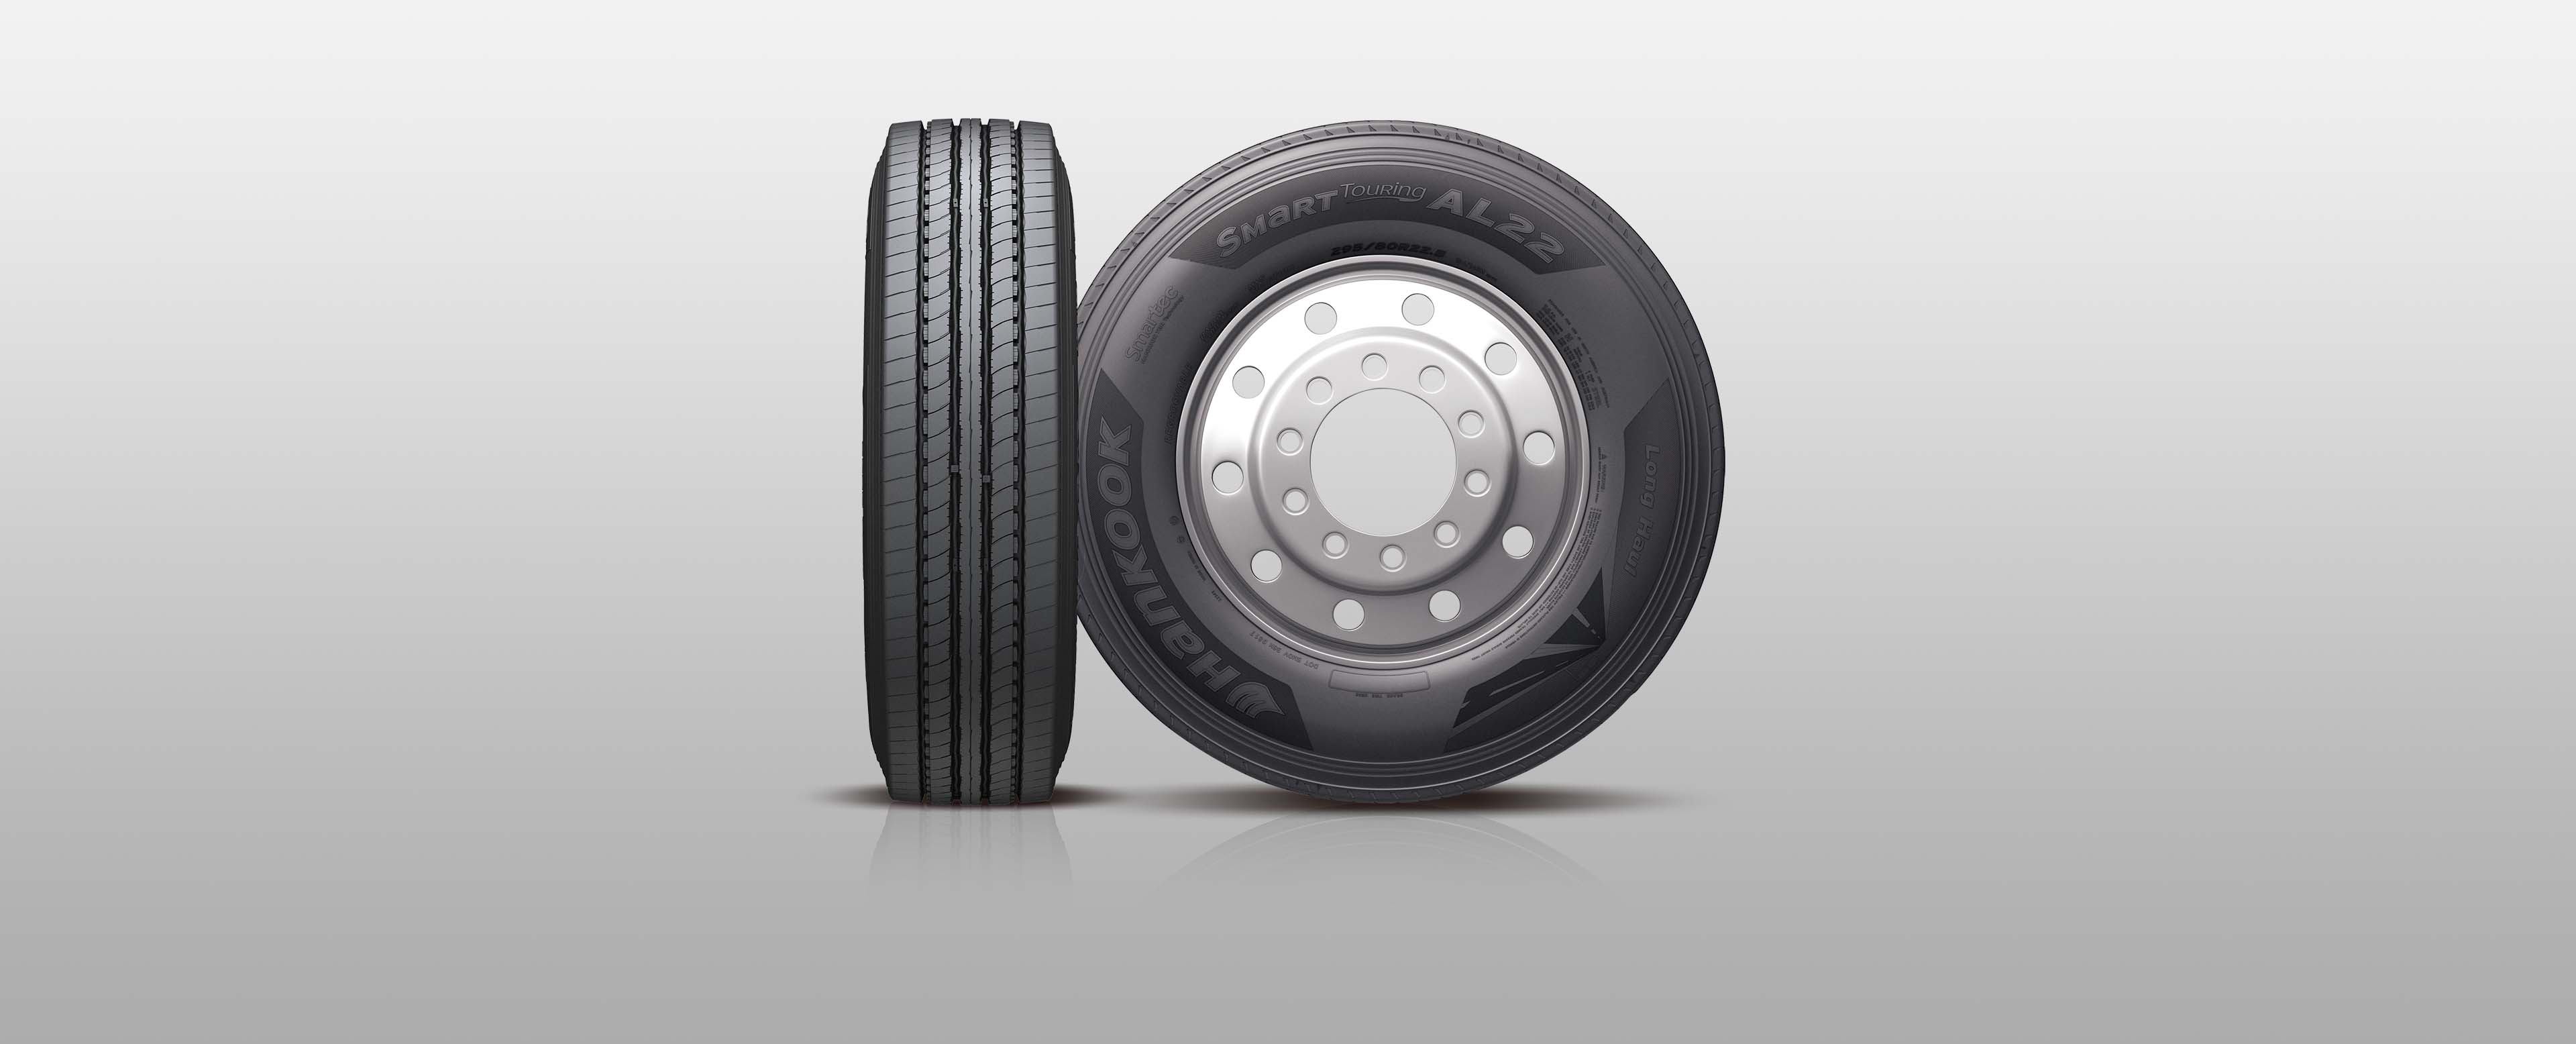 Hankook Tire & Technology-Tires-Smart-Smart Touring-AL22-Premium all position coach bus tire